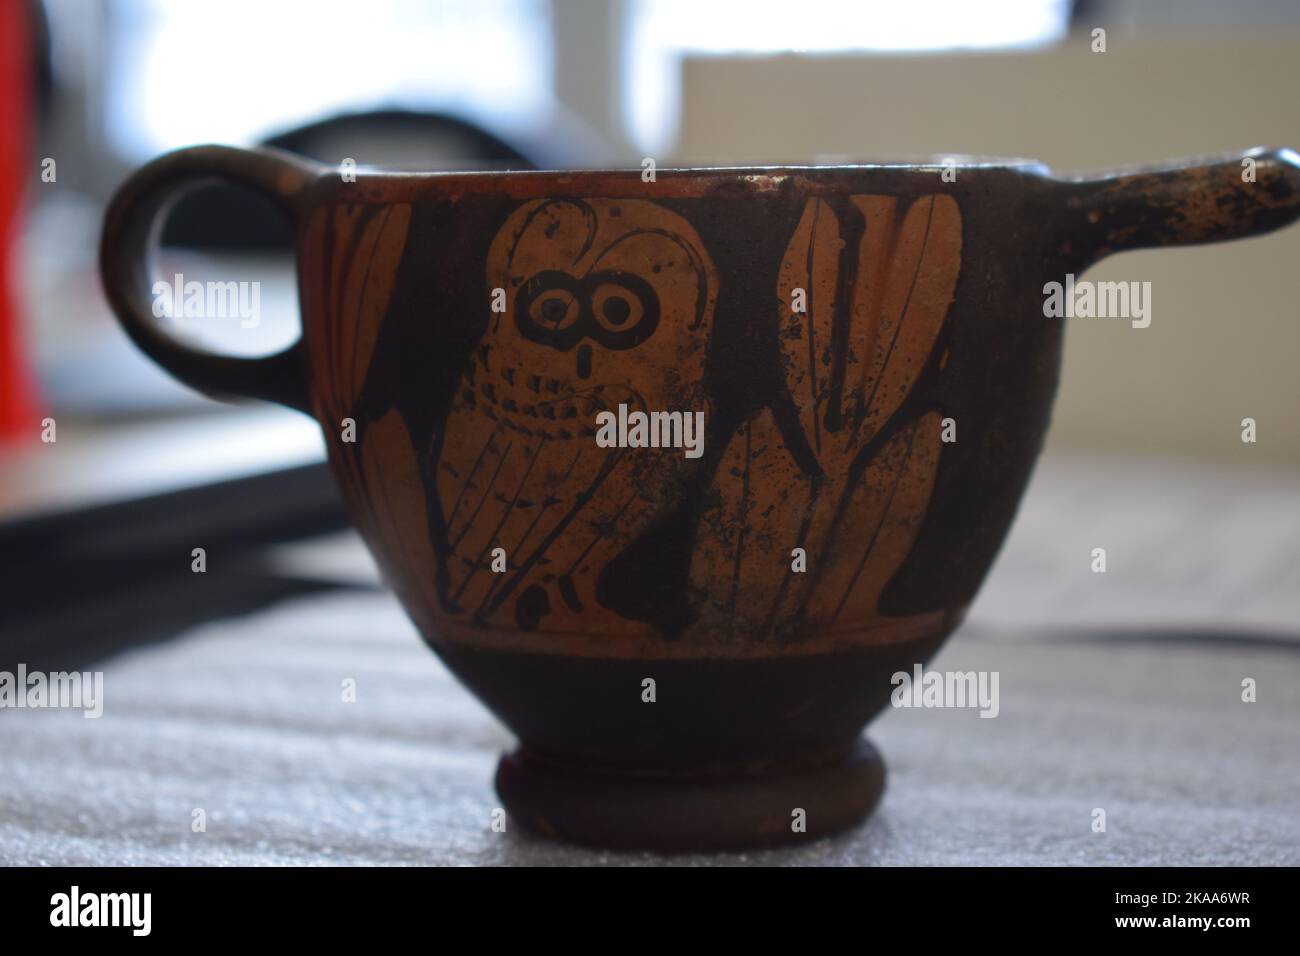 https://c8.alamy.com/comp/2KAA6WR/a-closeup-shot-of-ceramic-pottery-with-owl-2KAA6WR.jpg